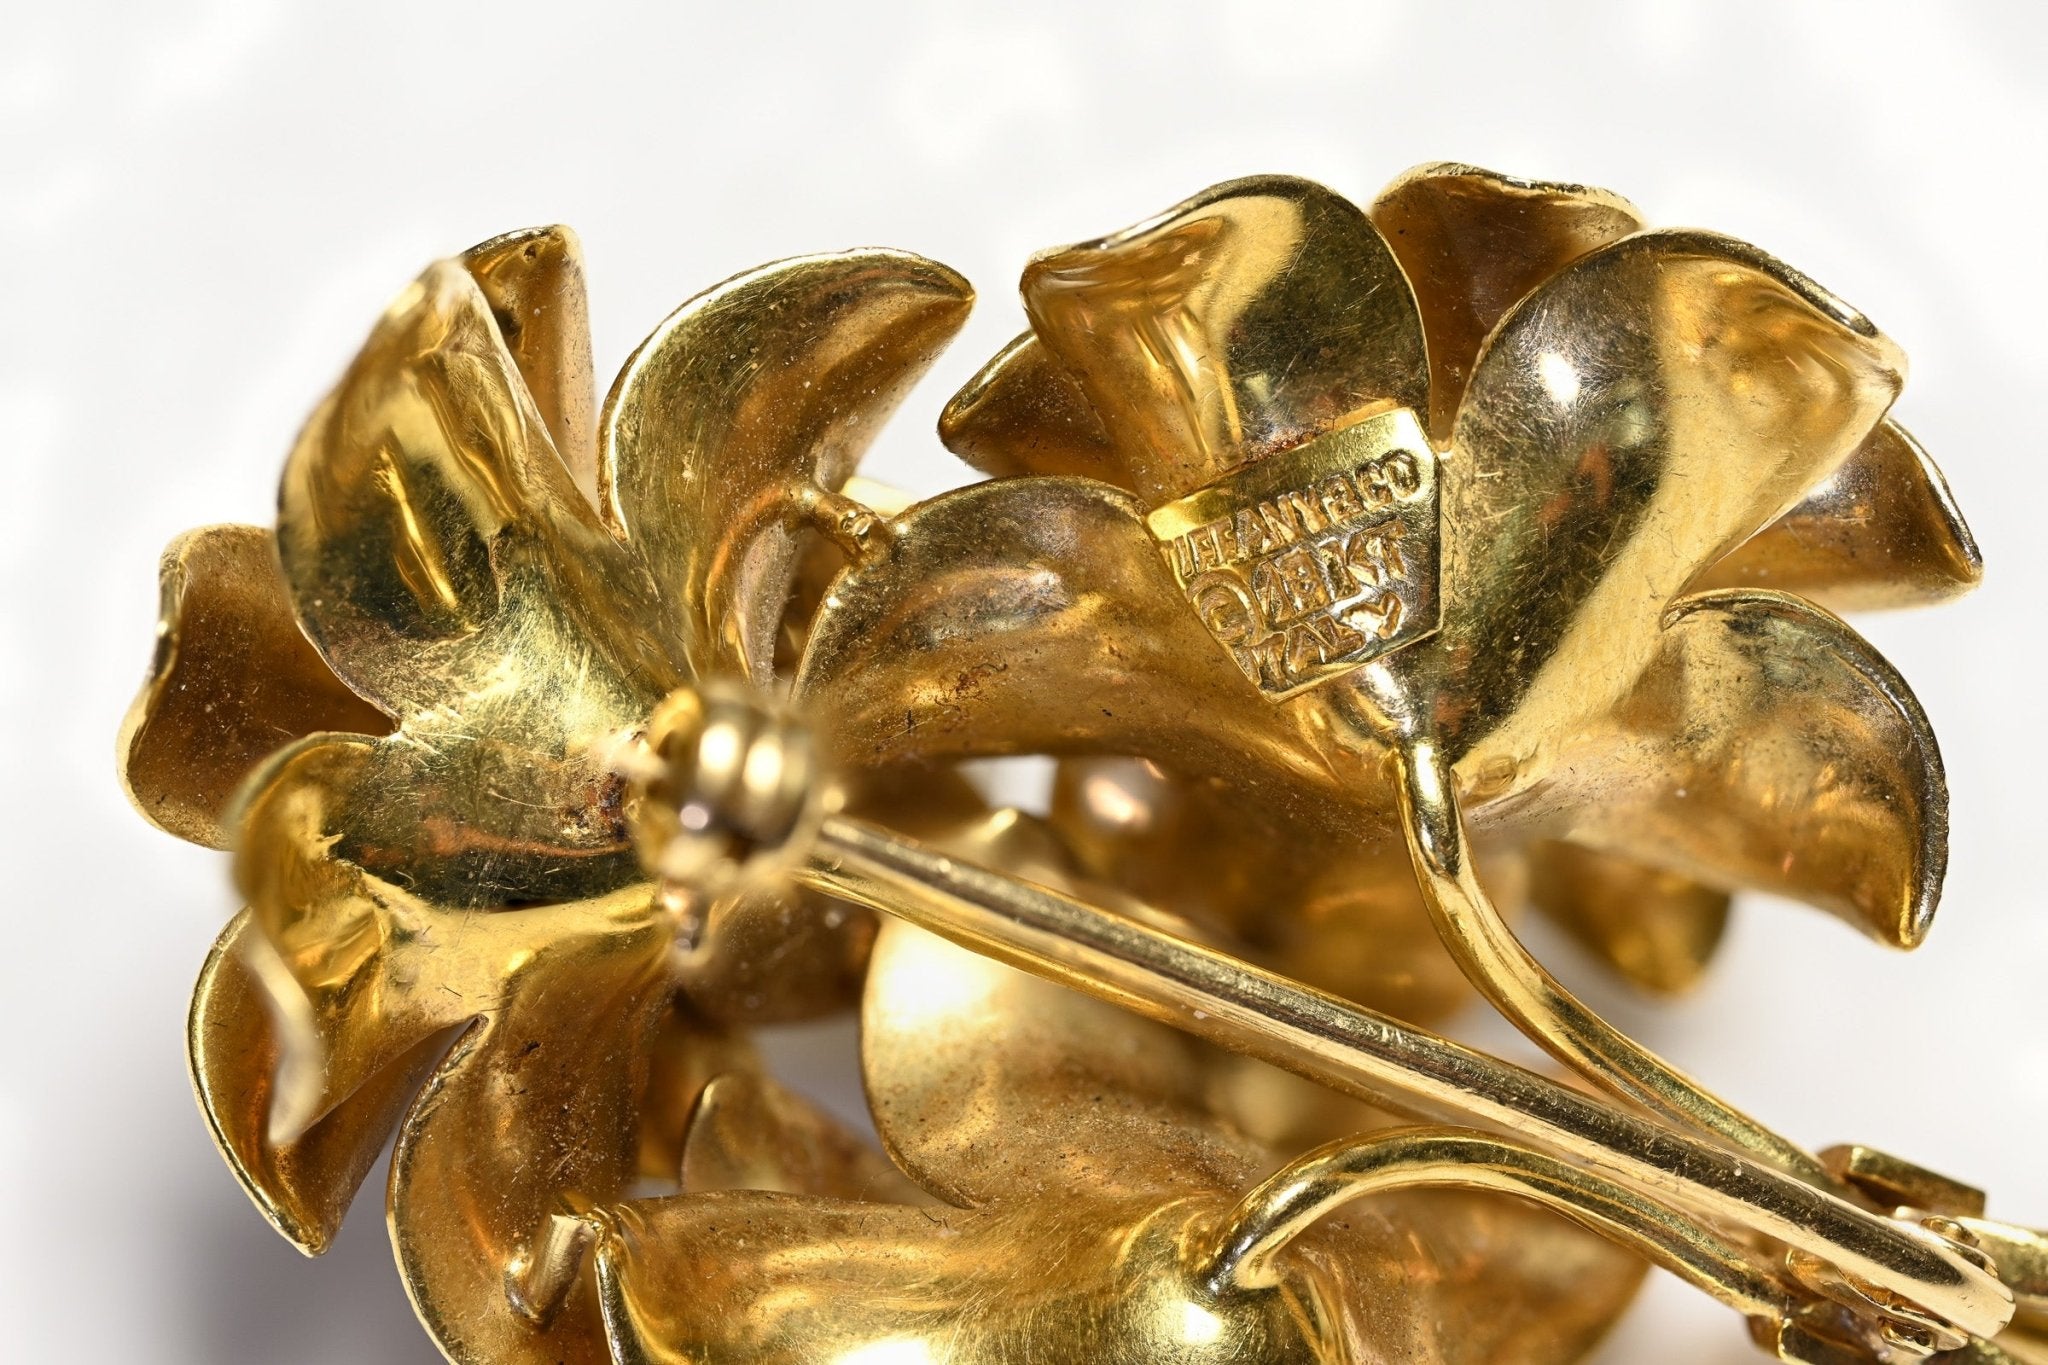 Tiffany & Co. 18K Gold Ruby Diamond Flower Brooch